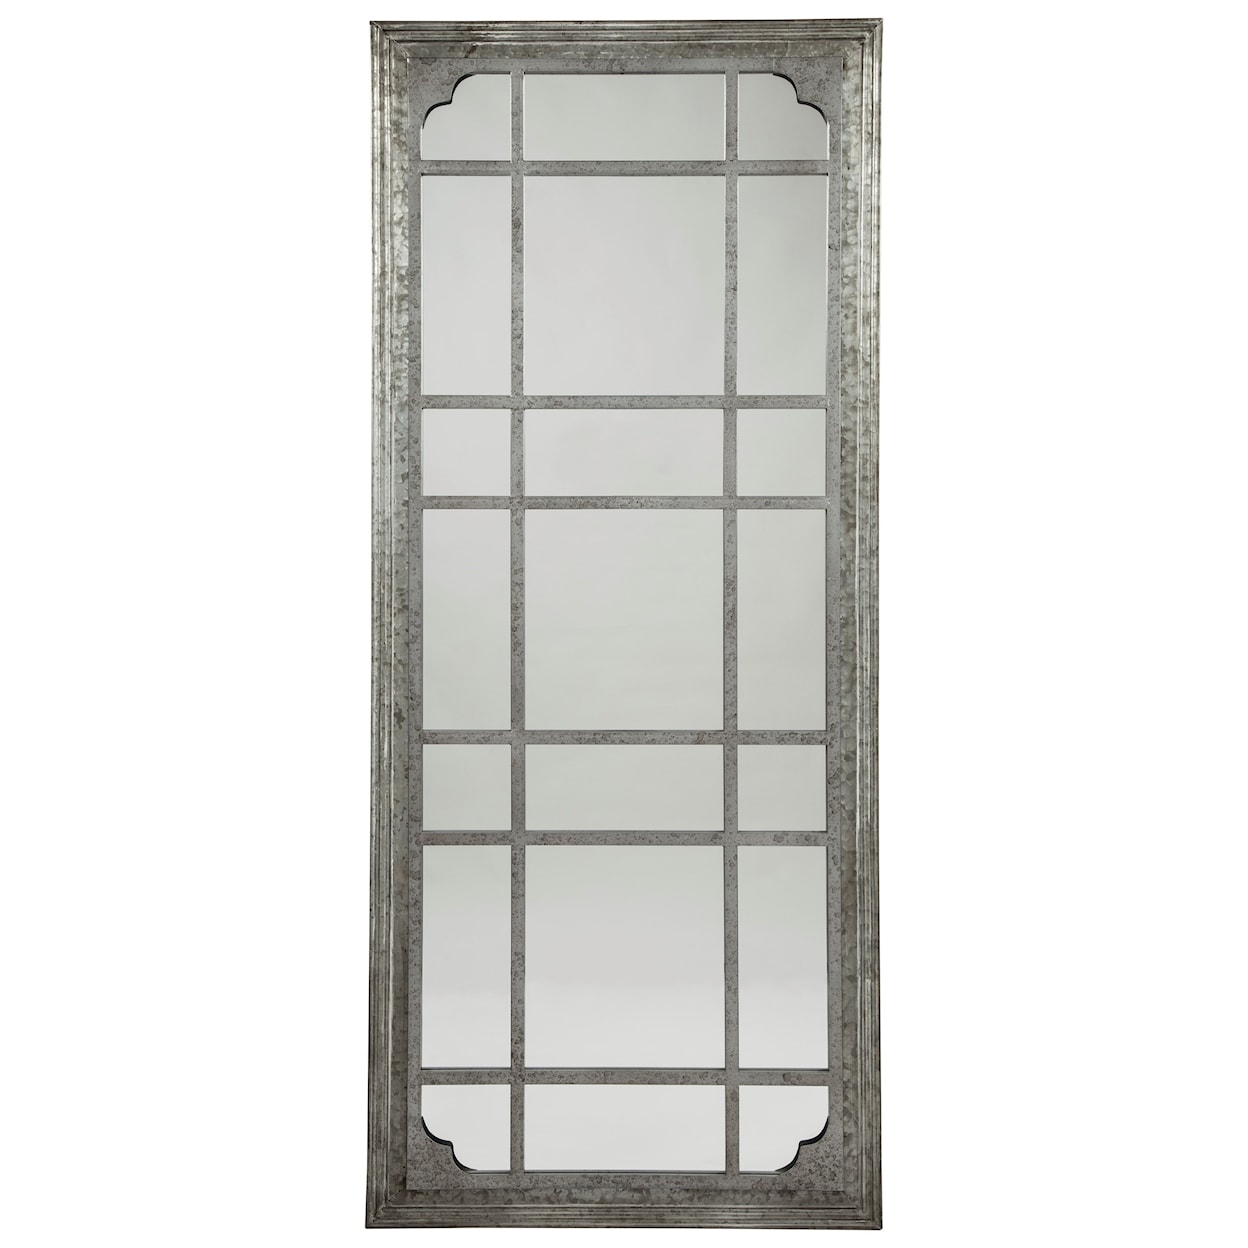 Ashley Furniture Signature Design Accent Mirrors Remy Antique Gray Accent Mirror